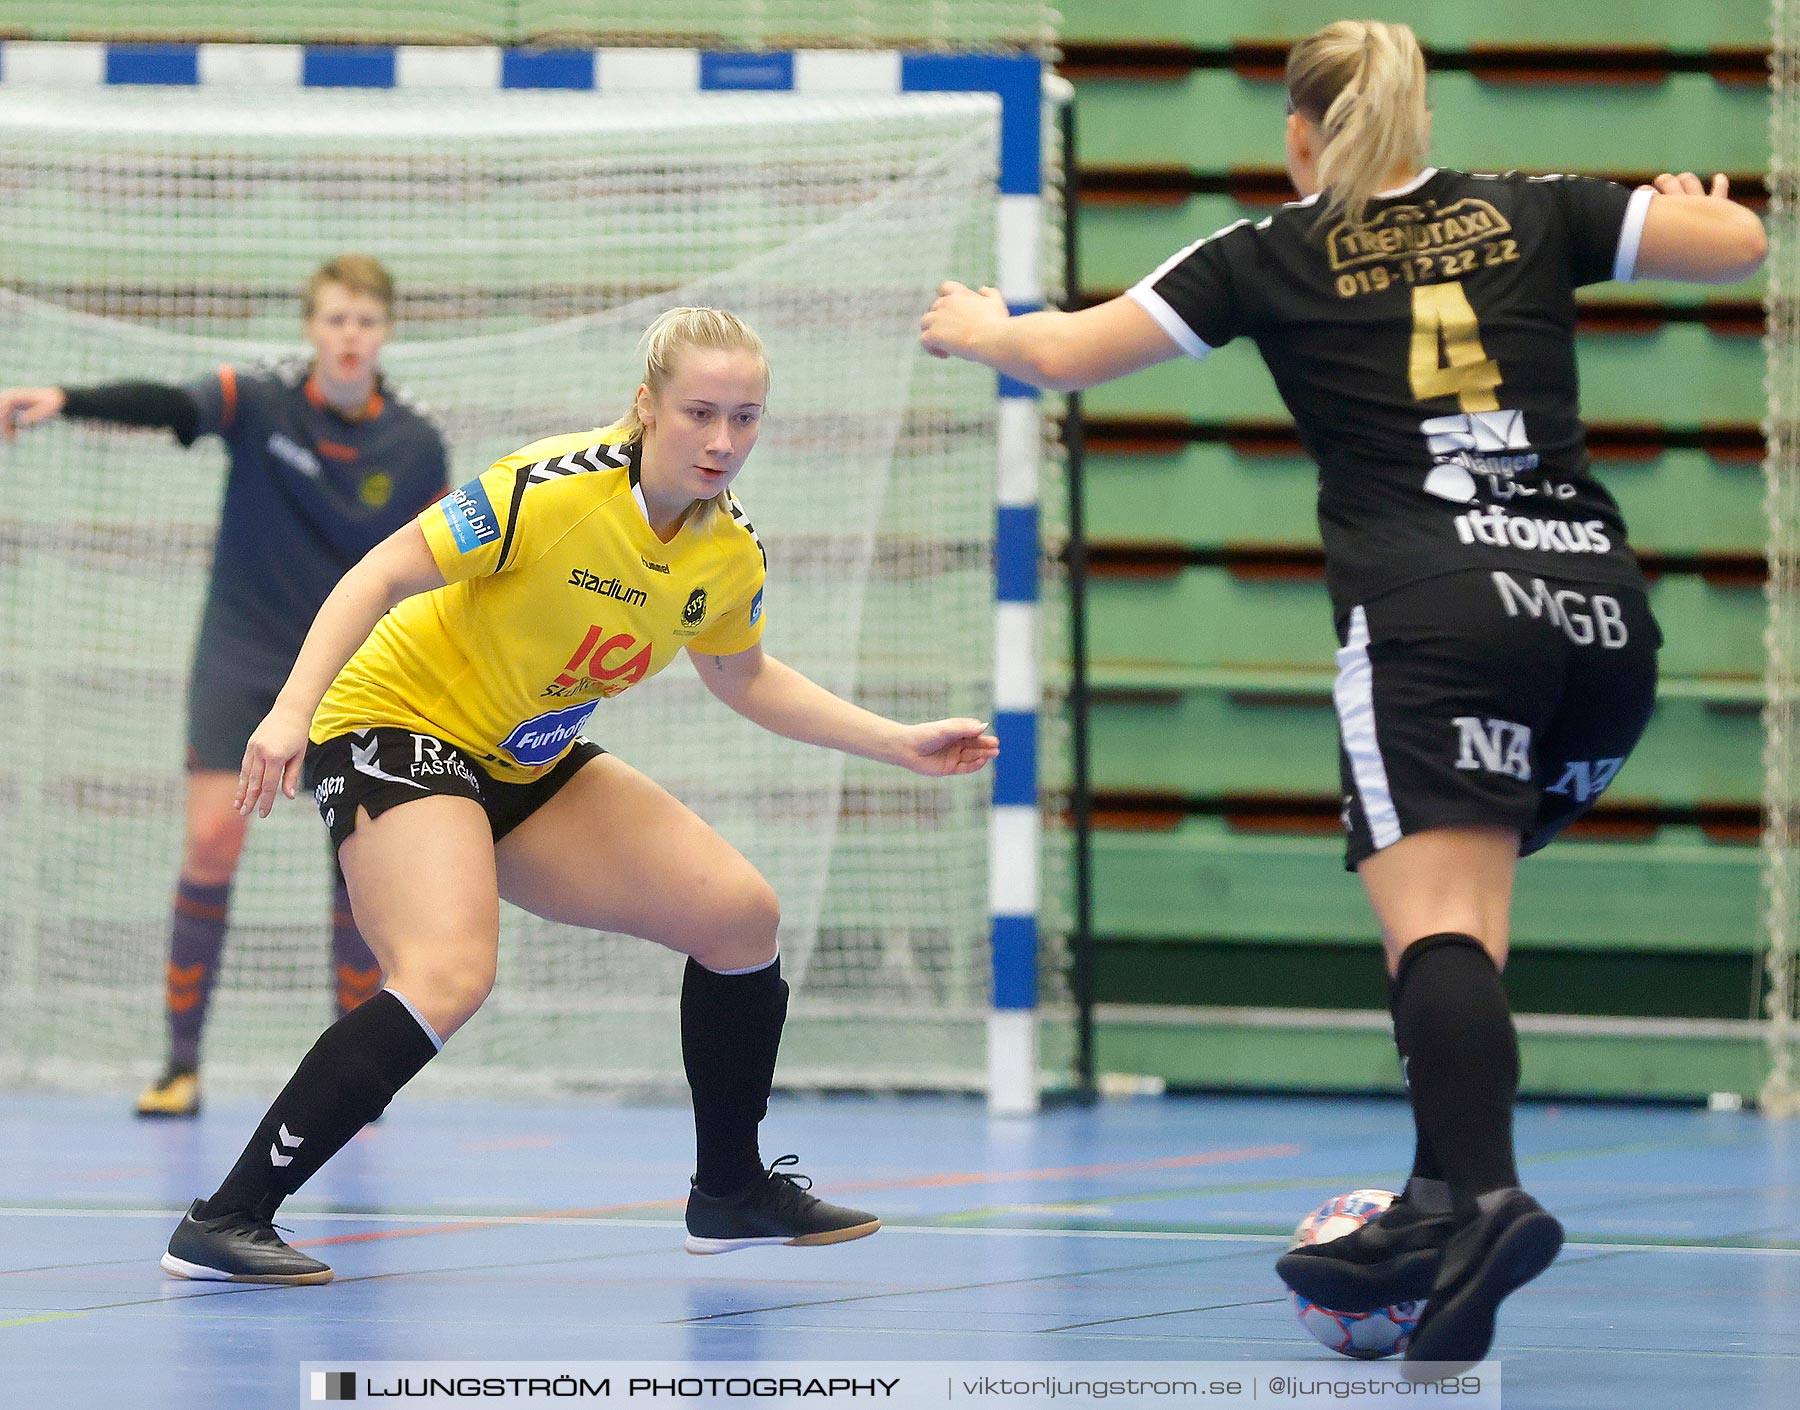 Skövde Futsalcup 2021 Damer Örebro Futsal Club-Skultorps IF 2,dam,Arena Skövde,Skövde,Sverige,Futsal,,2021,270484